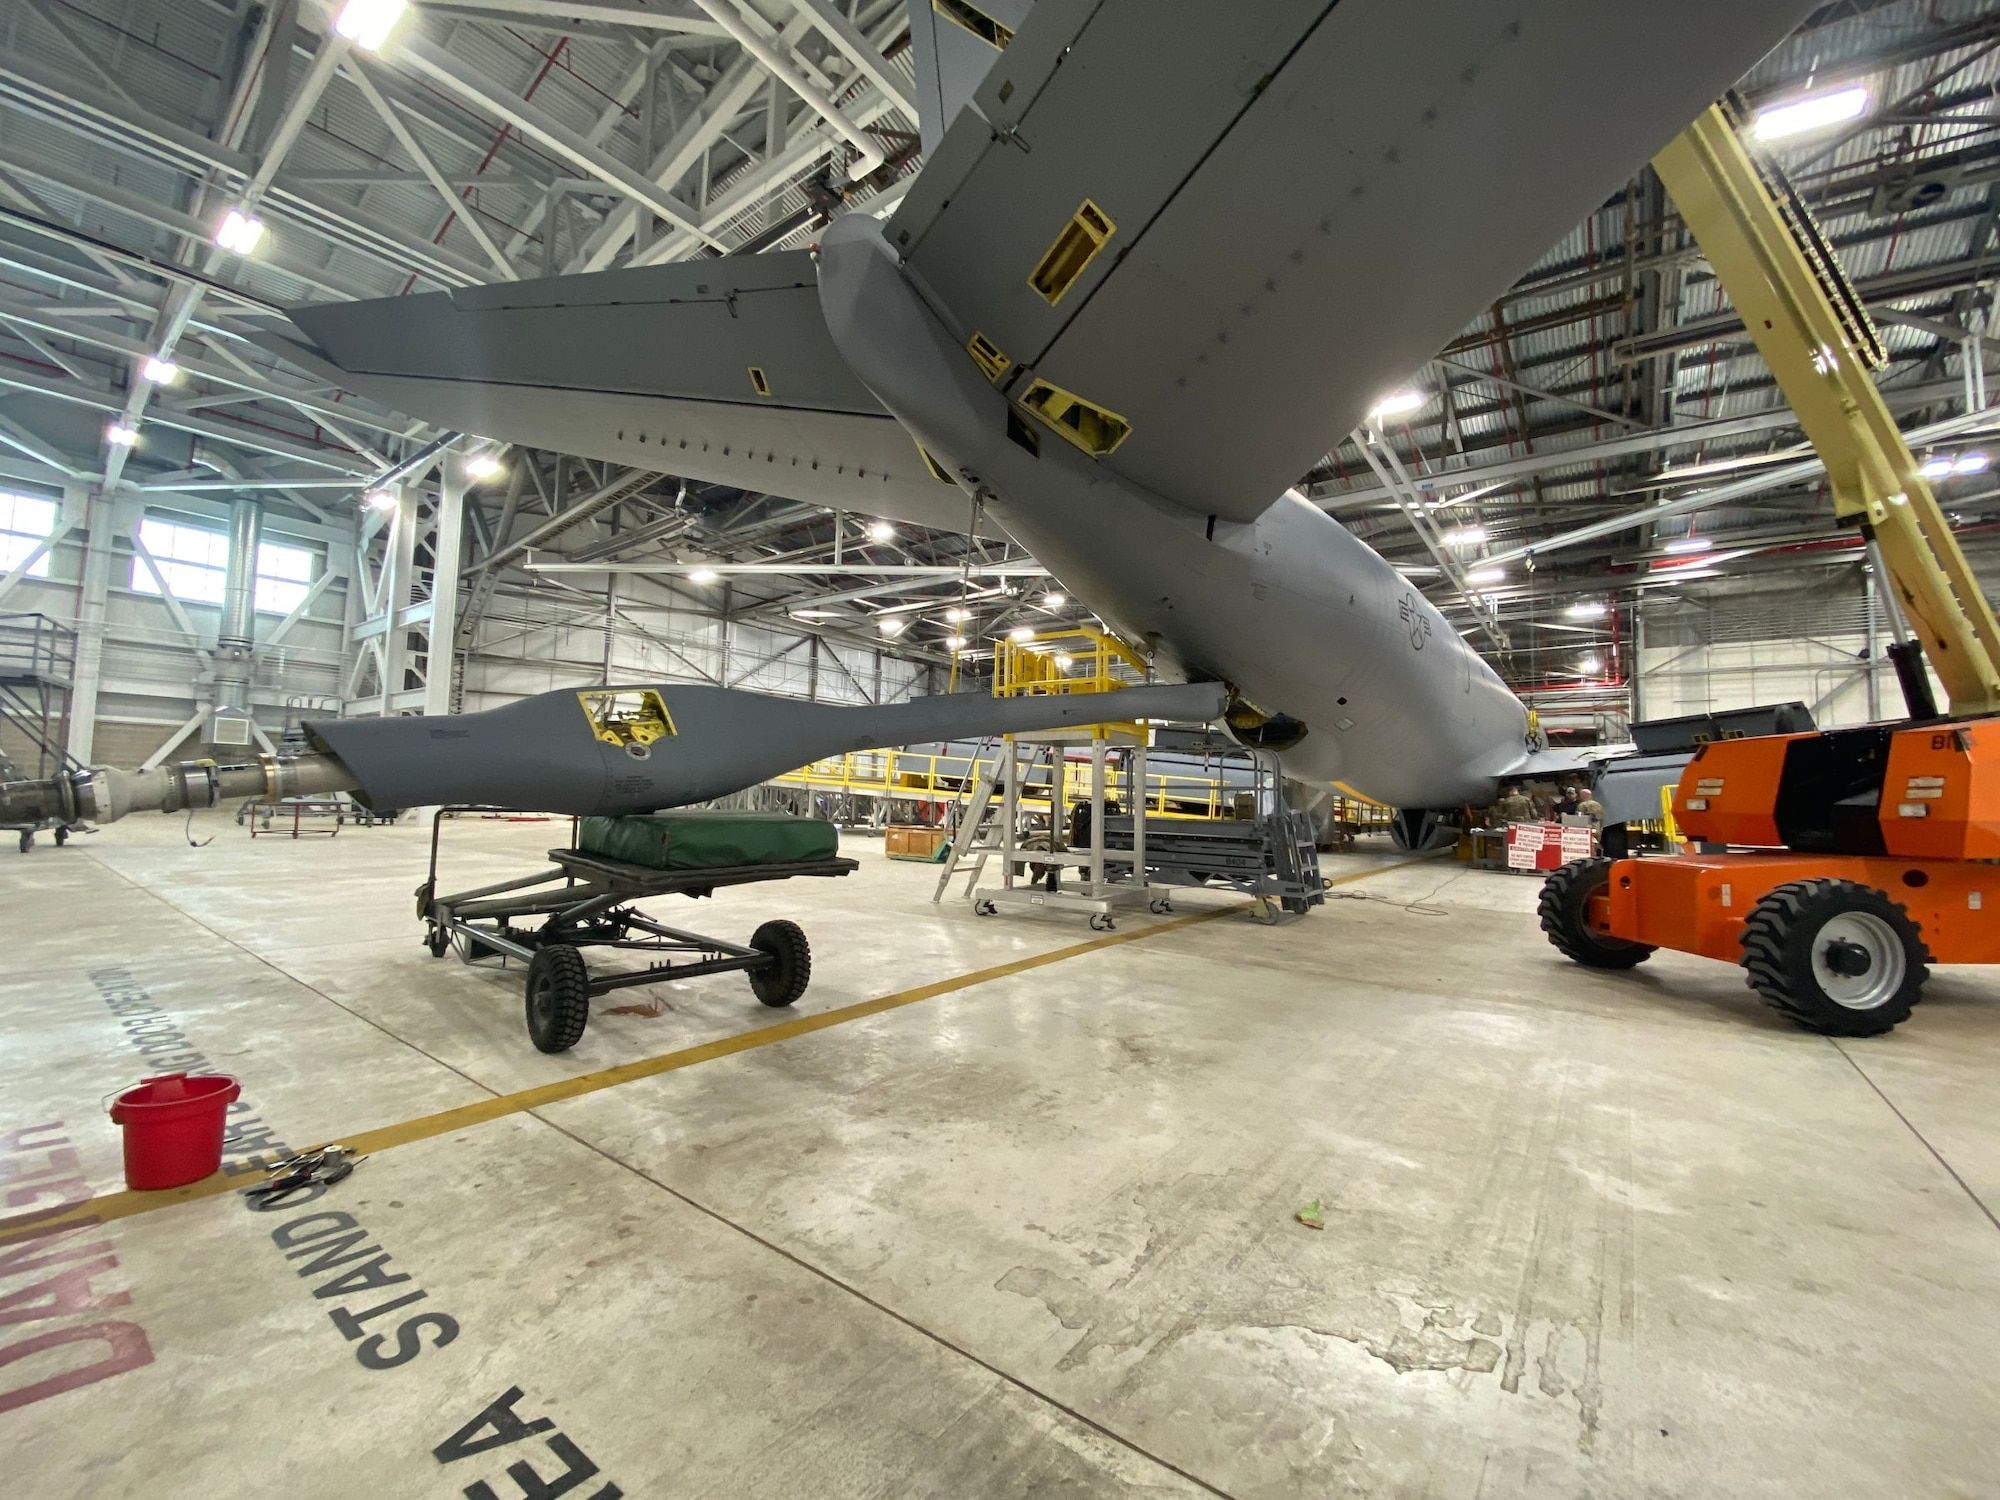 KC-135 Stratotanker in a hangar